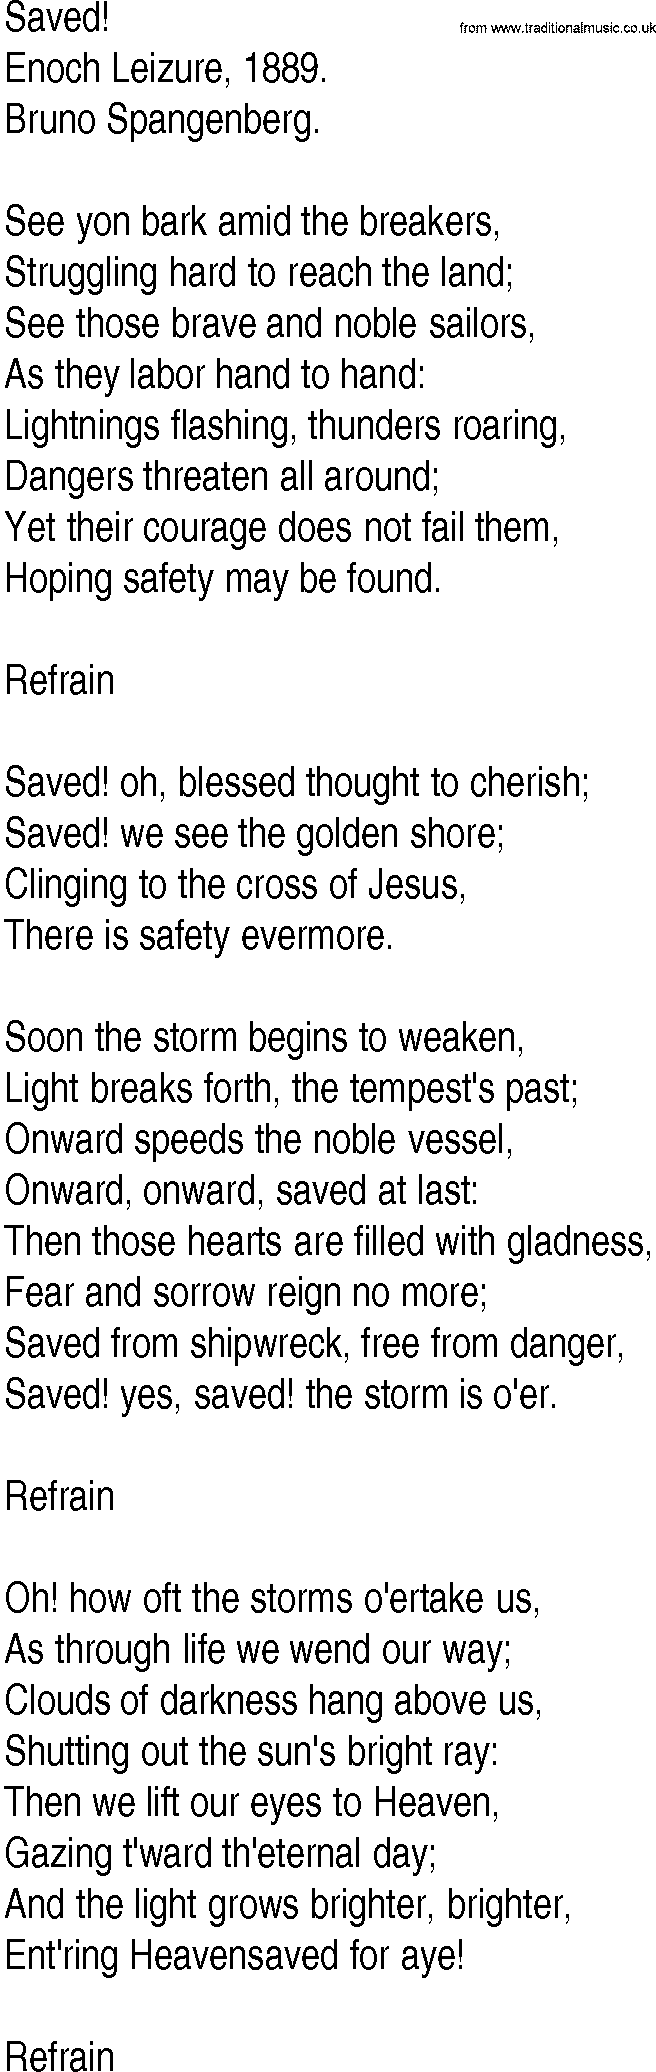 Hymn and Gospel Song: Saved! by Enoch Leizure lyrics